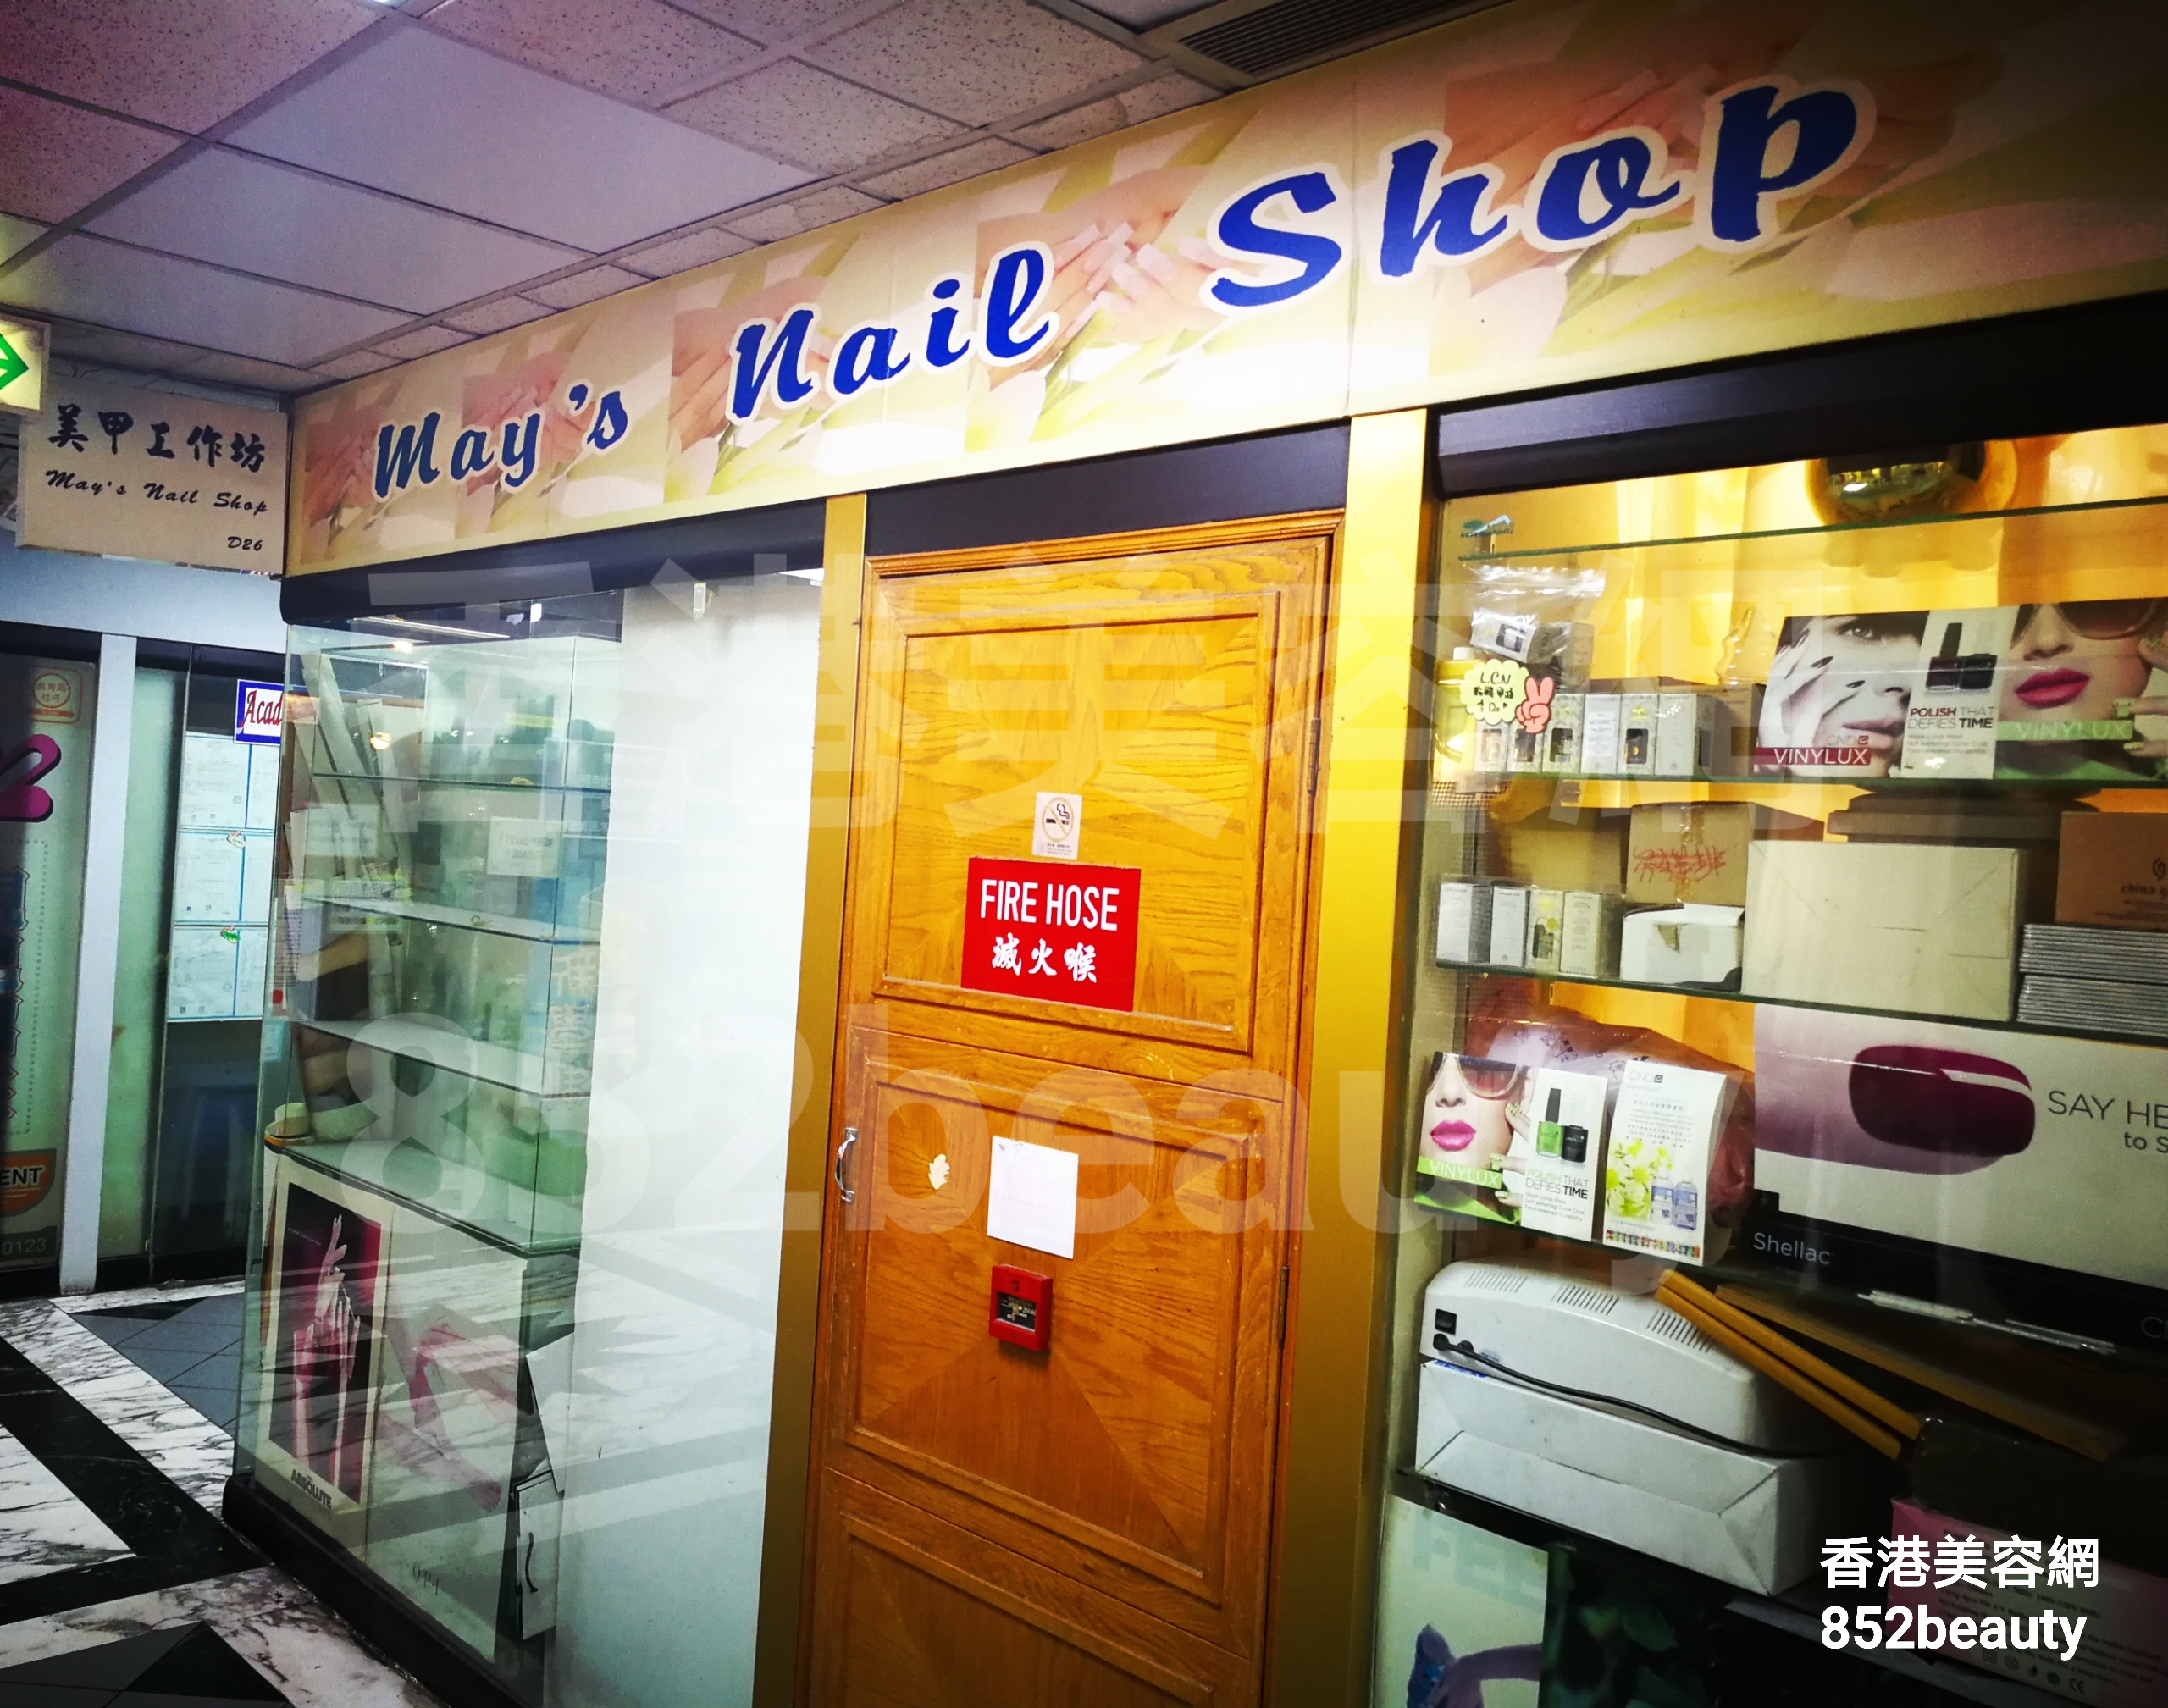 香港美容網 Hong Kong Beauty Salon 美容院 / 美容師: May's Nail Shop